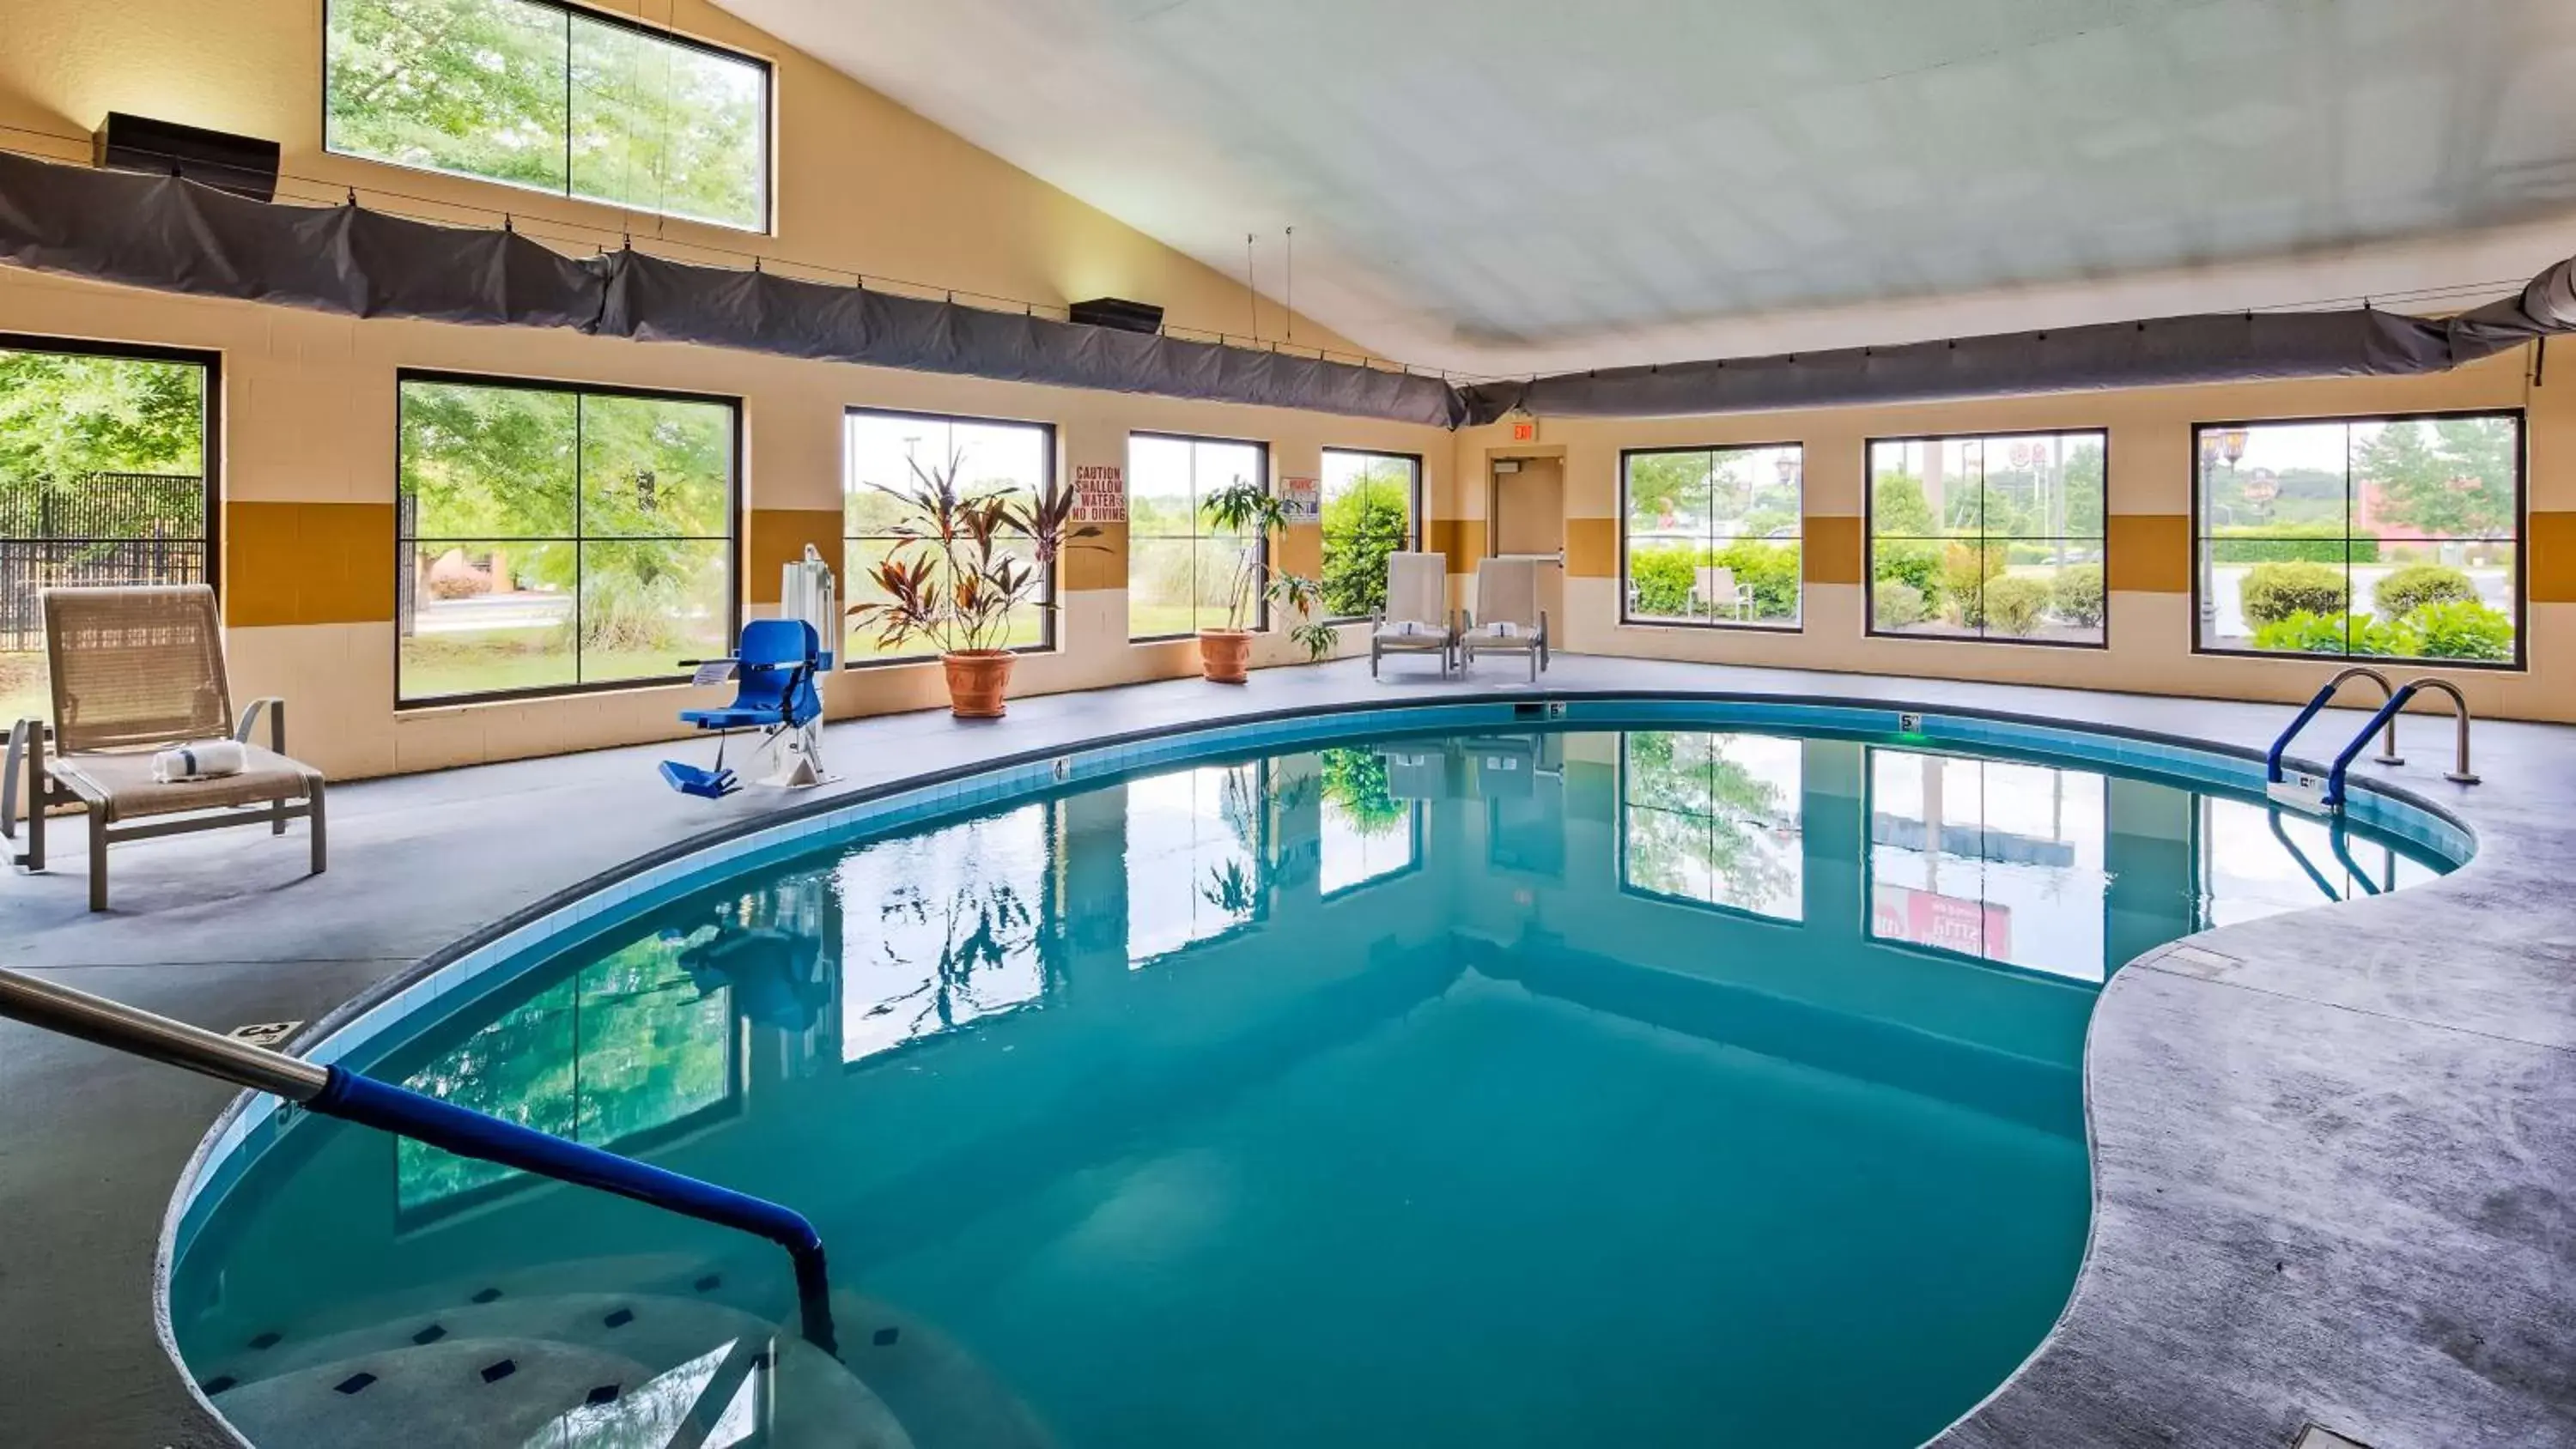 On site, Swimming Pool in Best Western Plus Strawberry Inn & Suites